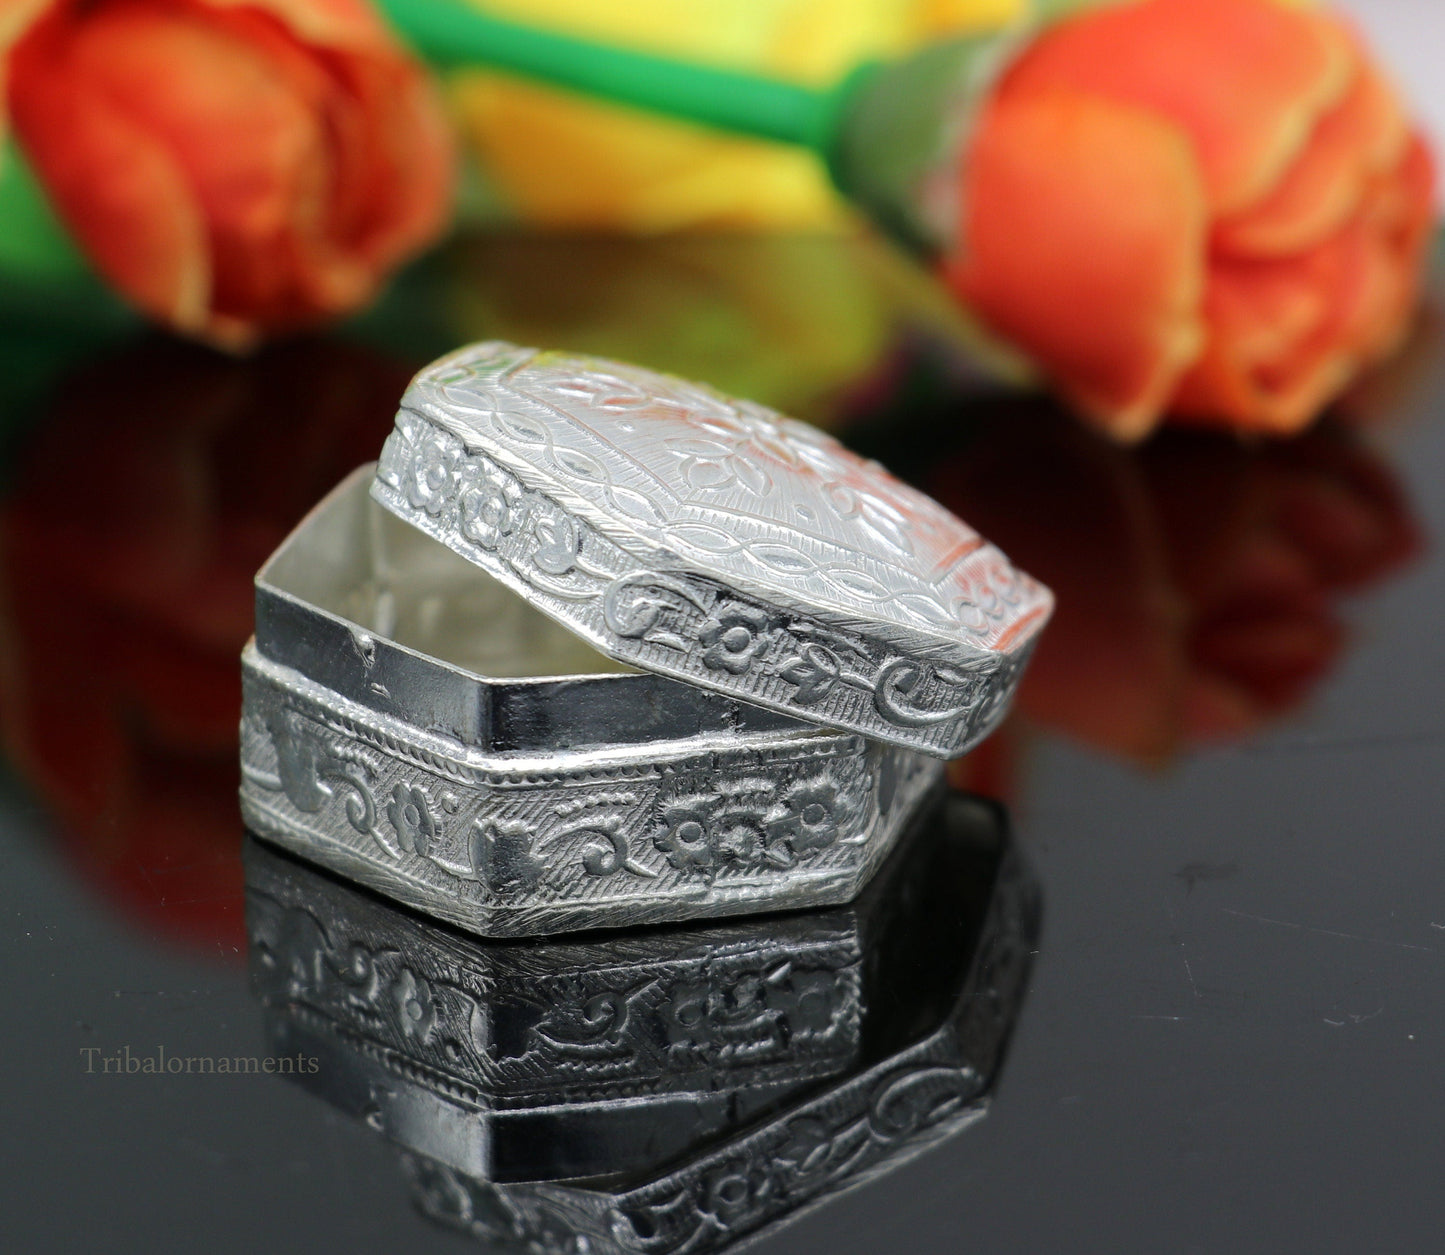 925 sterling silver trinket box, kajal box/casket box bridal polygon shape sindur box collection, container box, eyeliner box gifting stb180 - TRIBAL ORNAMENTS